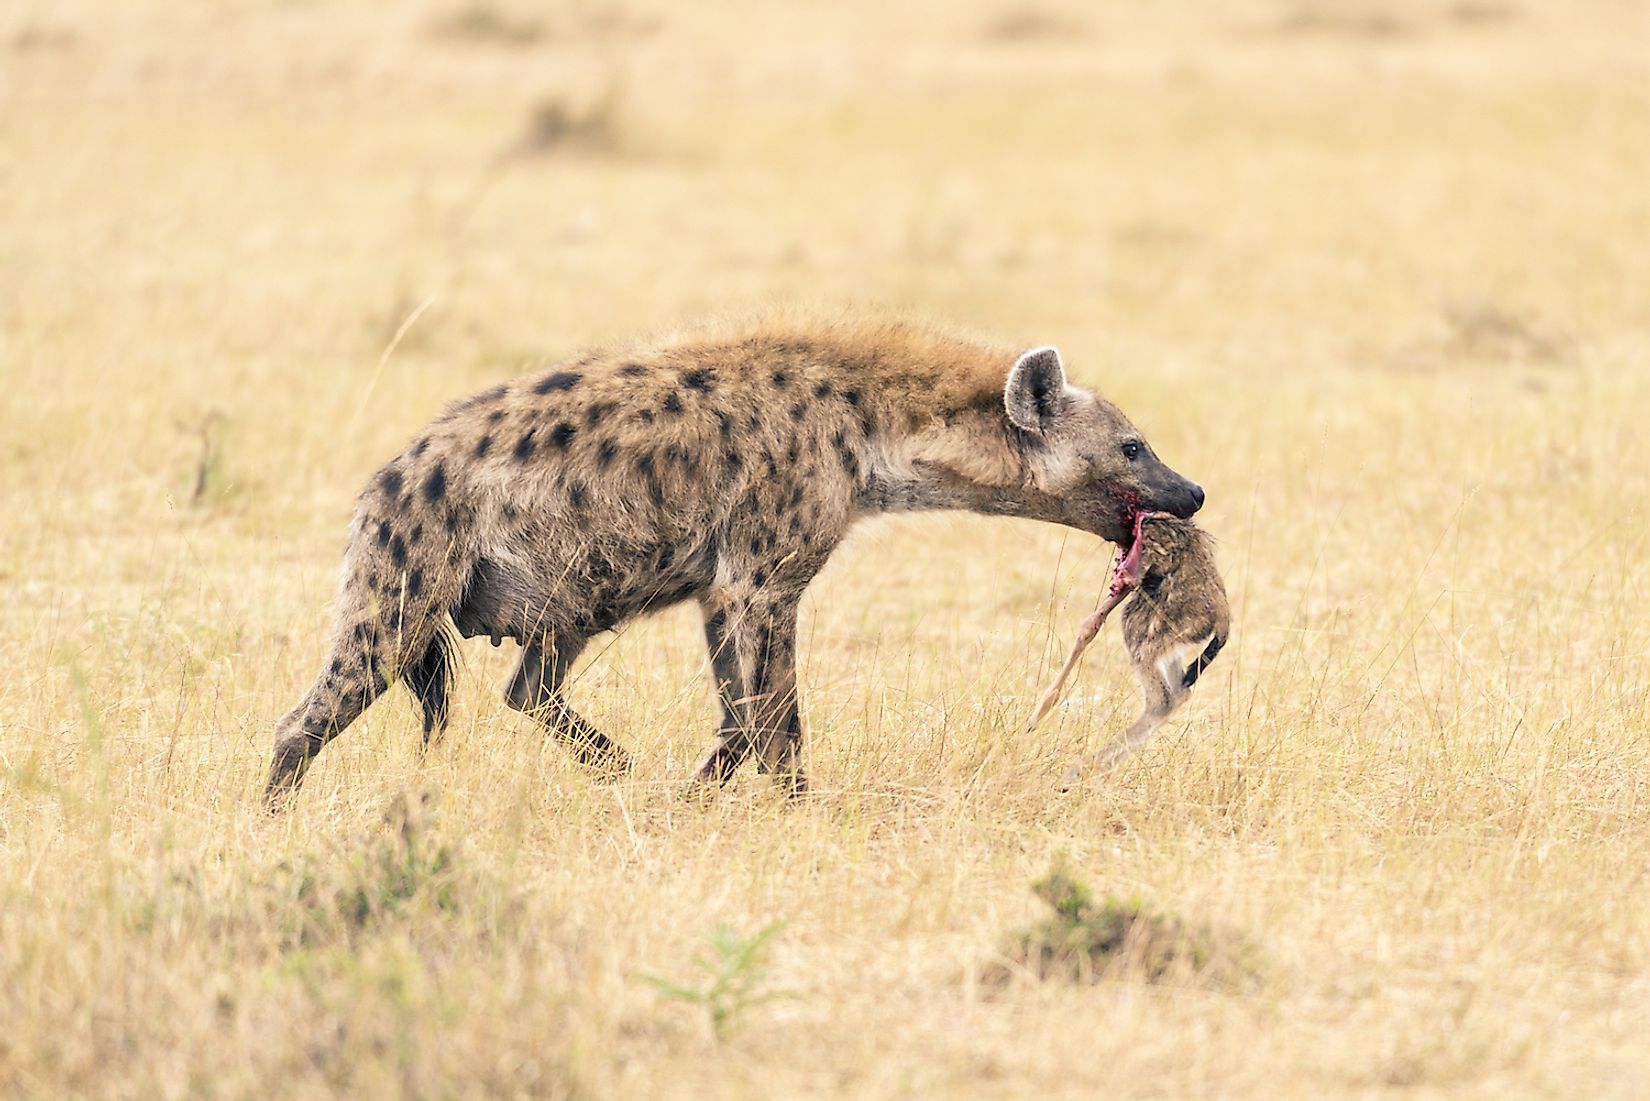 Popular Myths About Hyenas Busted - WorldAtlas